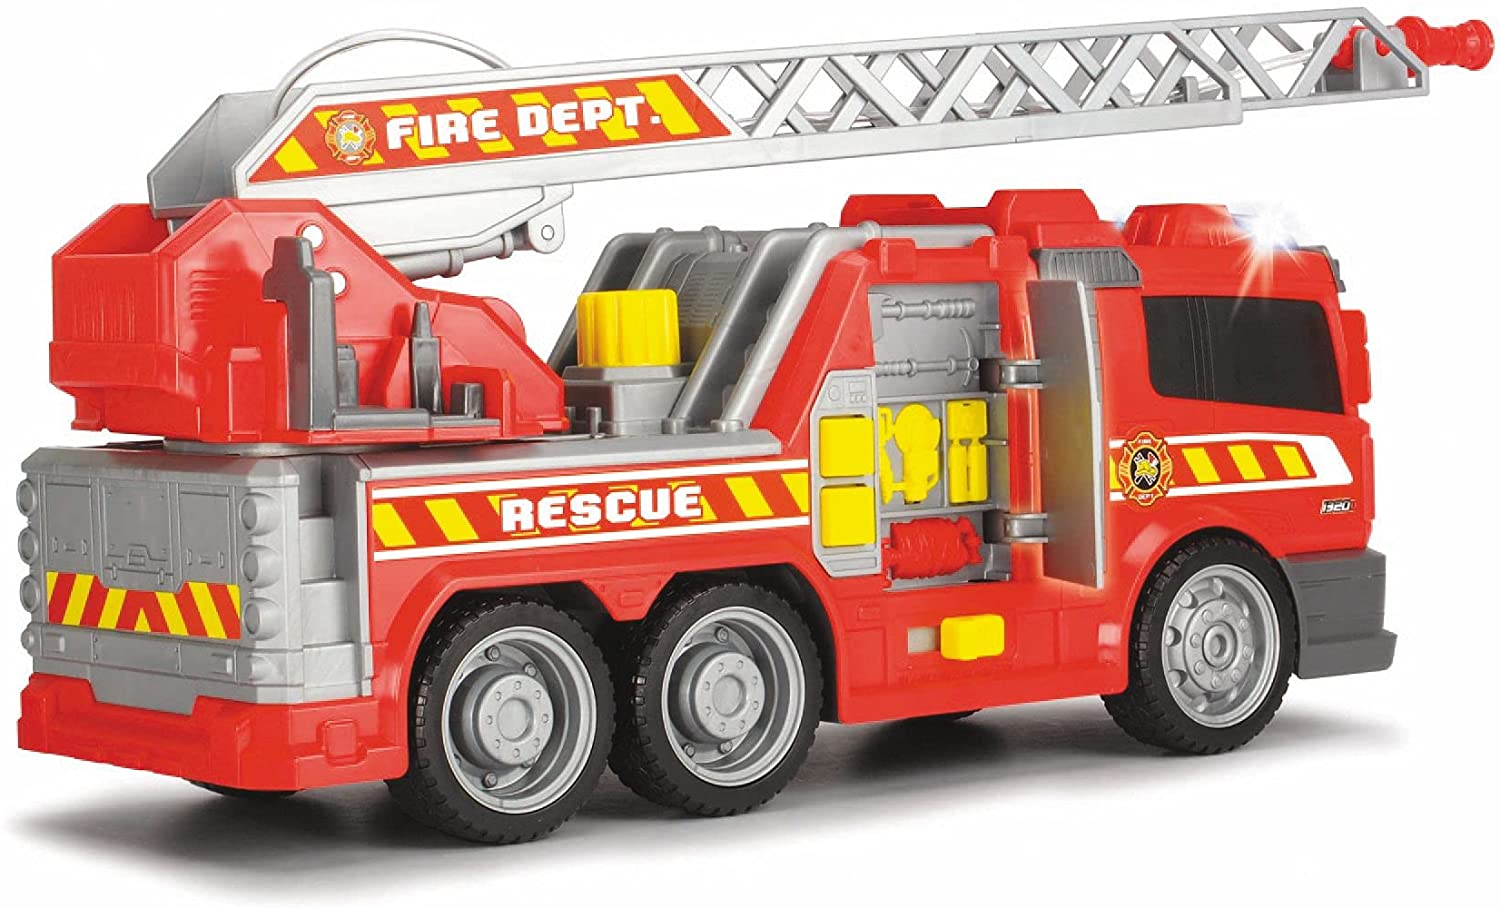 camion de bomberos de juguete